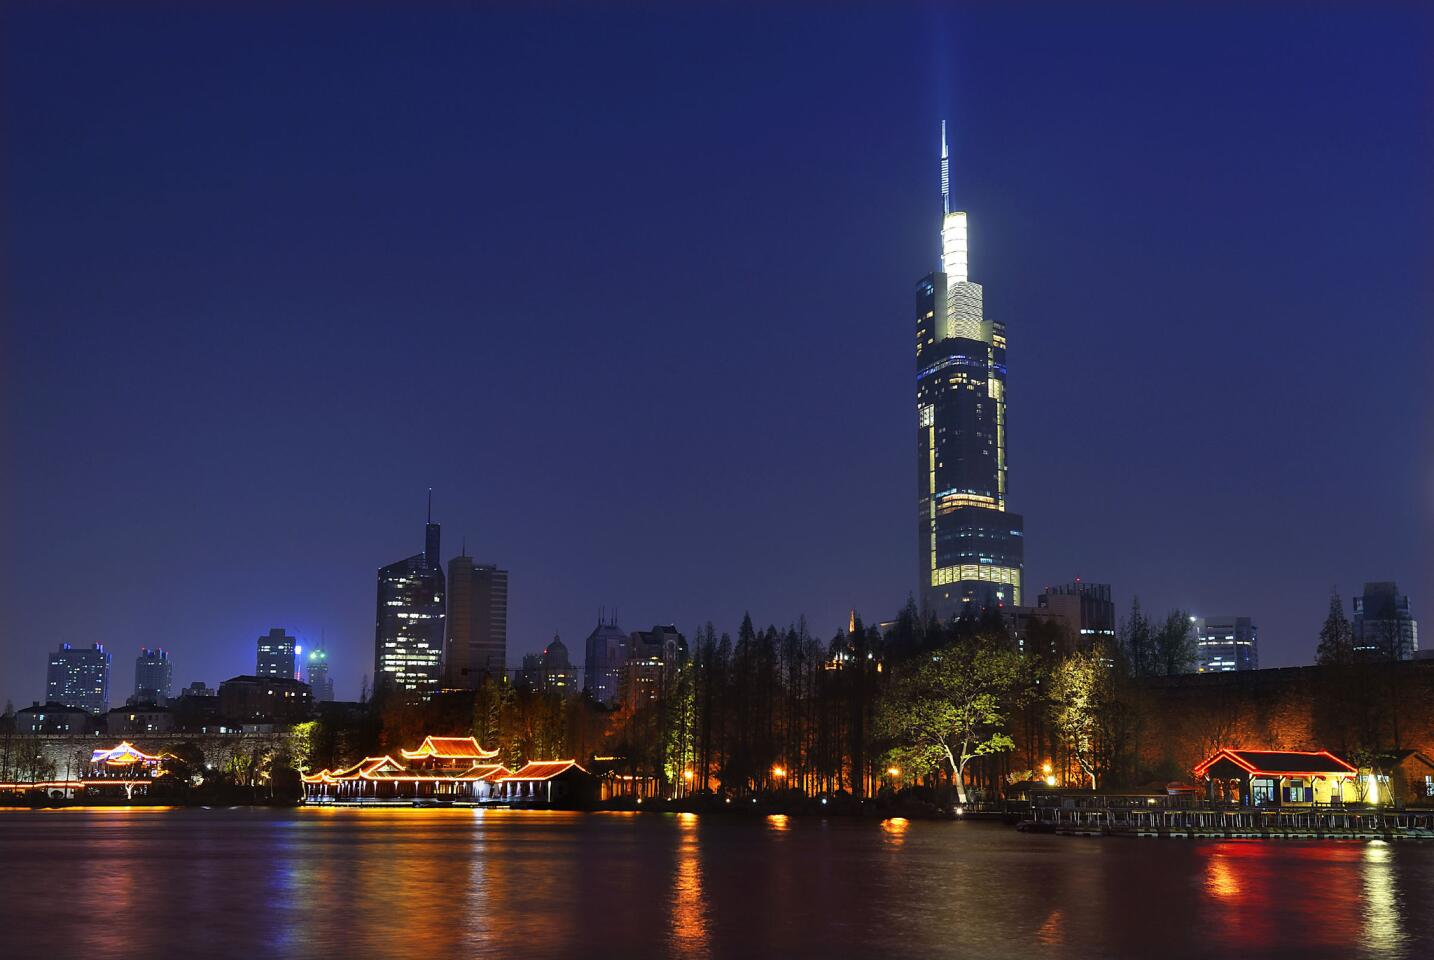 10. Zifeng Tower